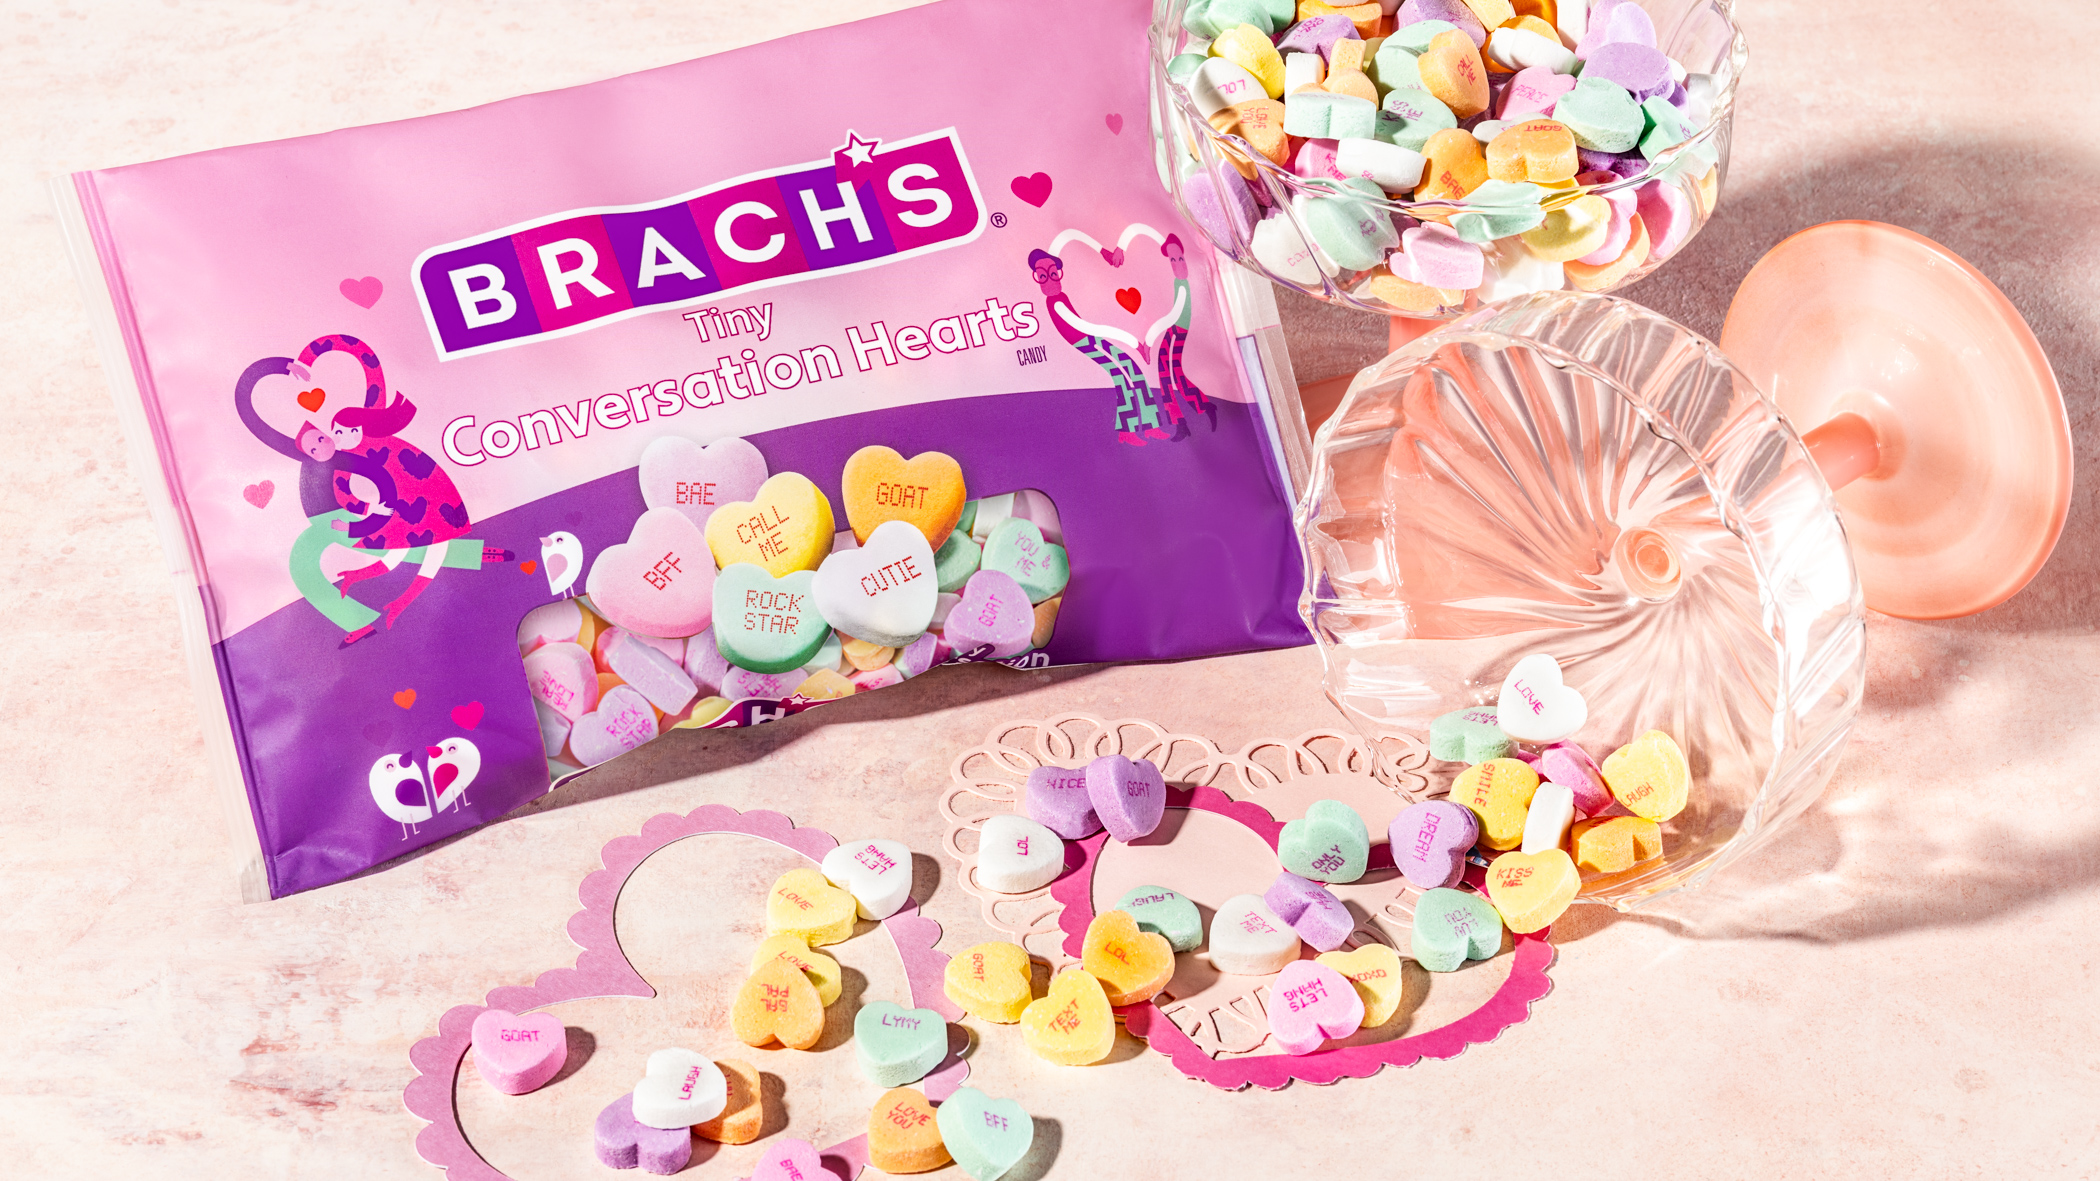 Brachs Candy Tin 